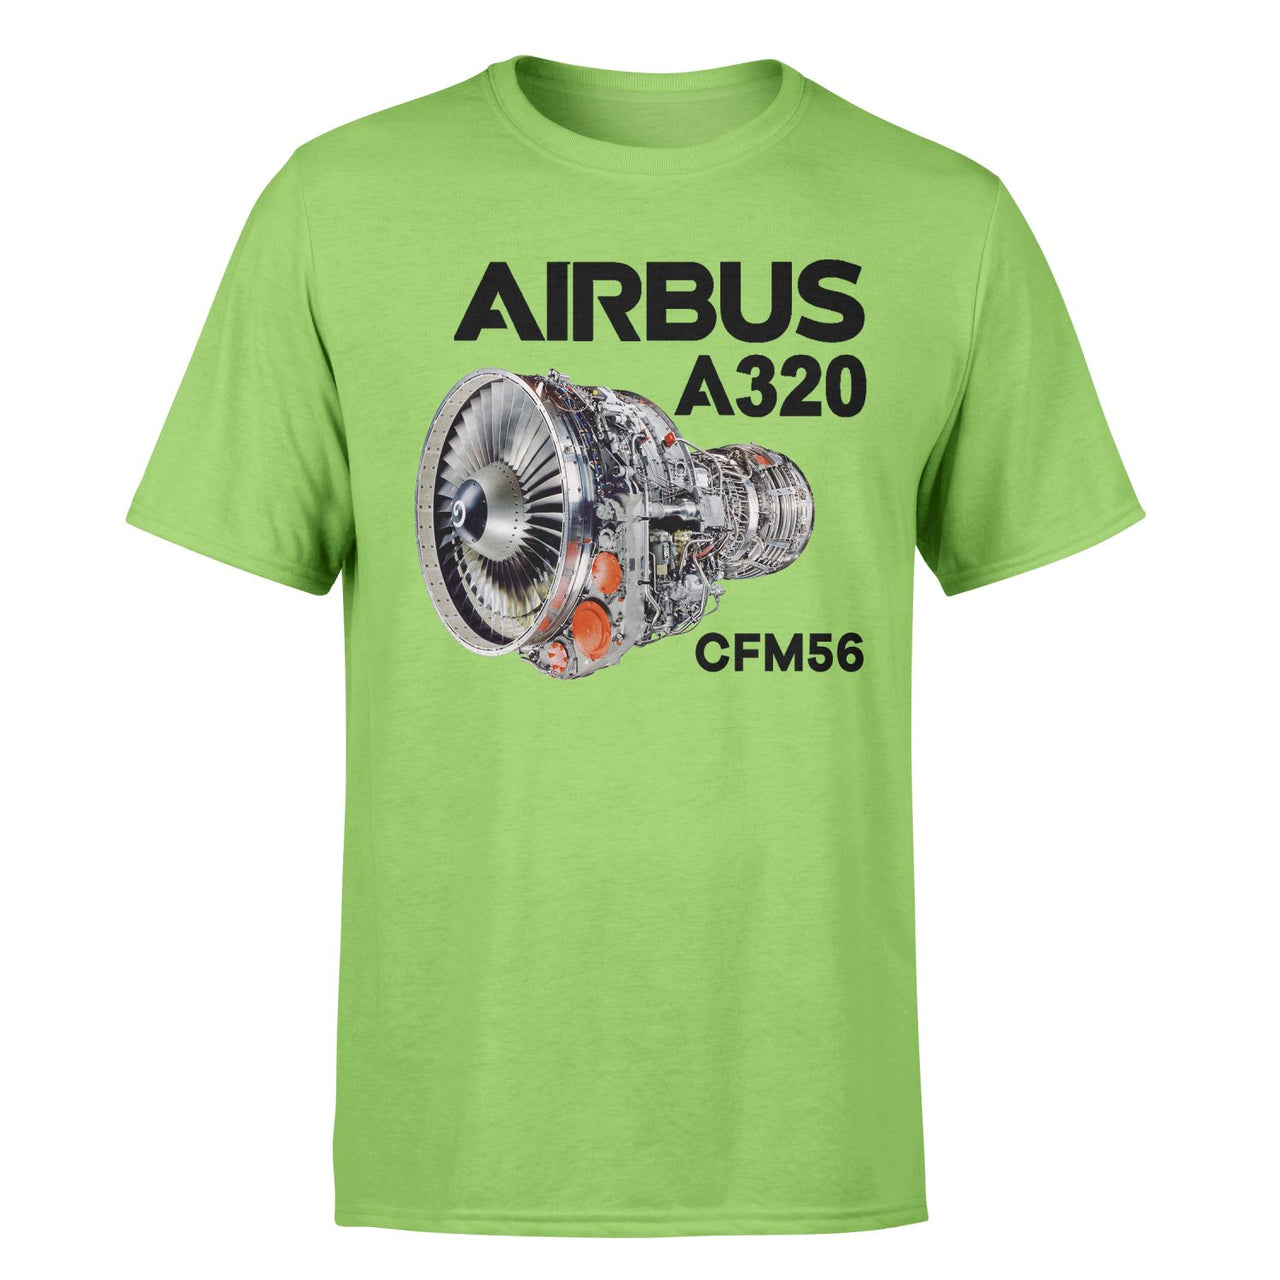 Airbus A320 & CFM56 Engine Designed T-Shirts